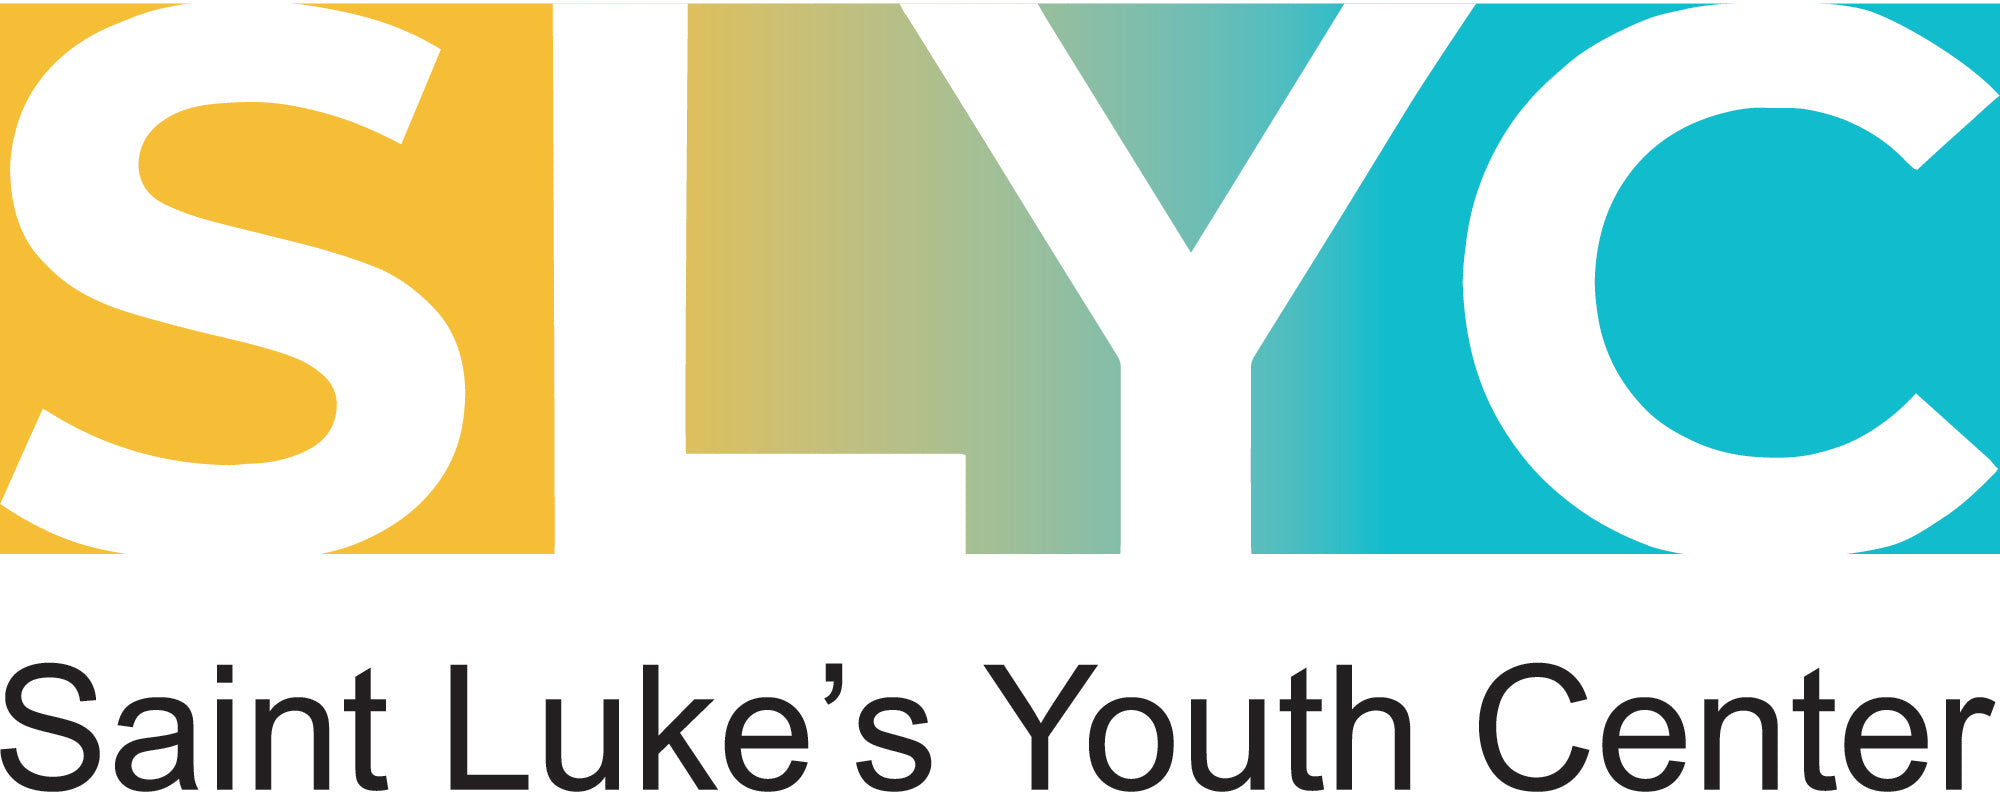 Saint Luke's Youth Center